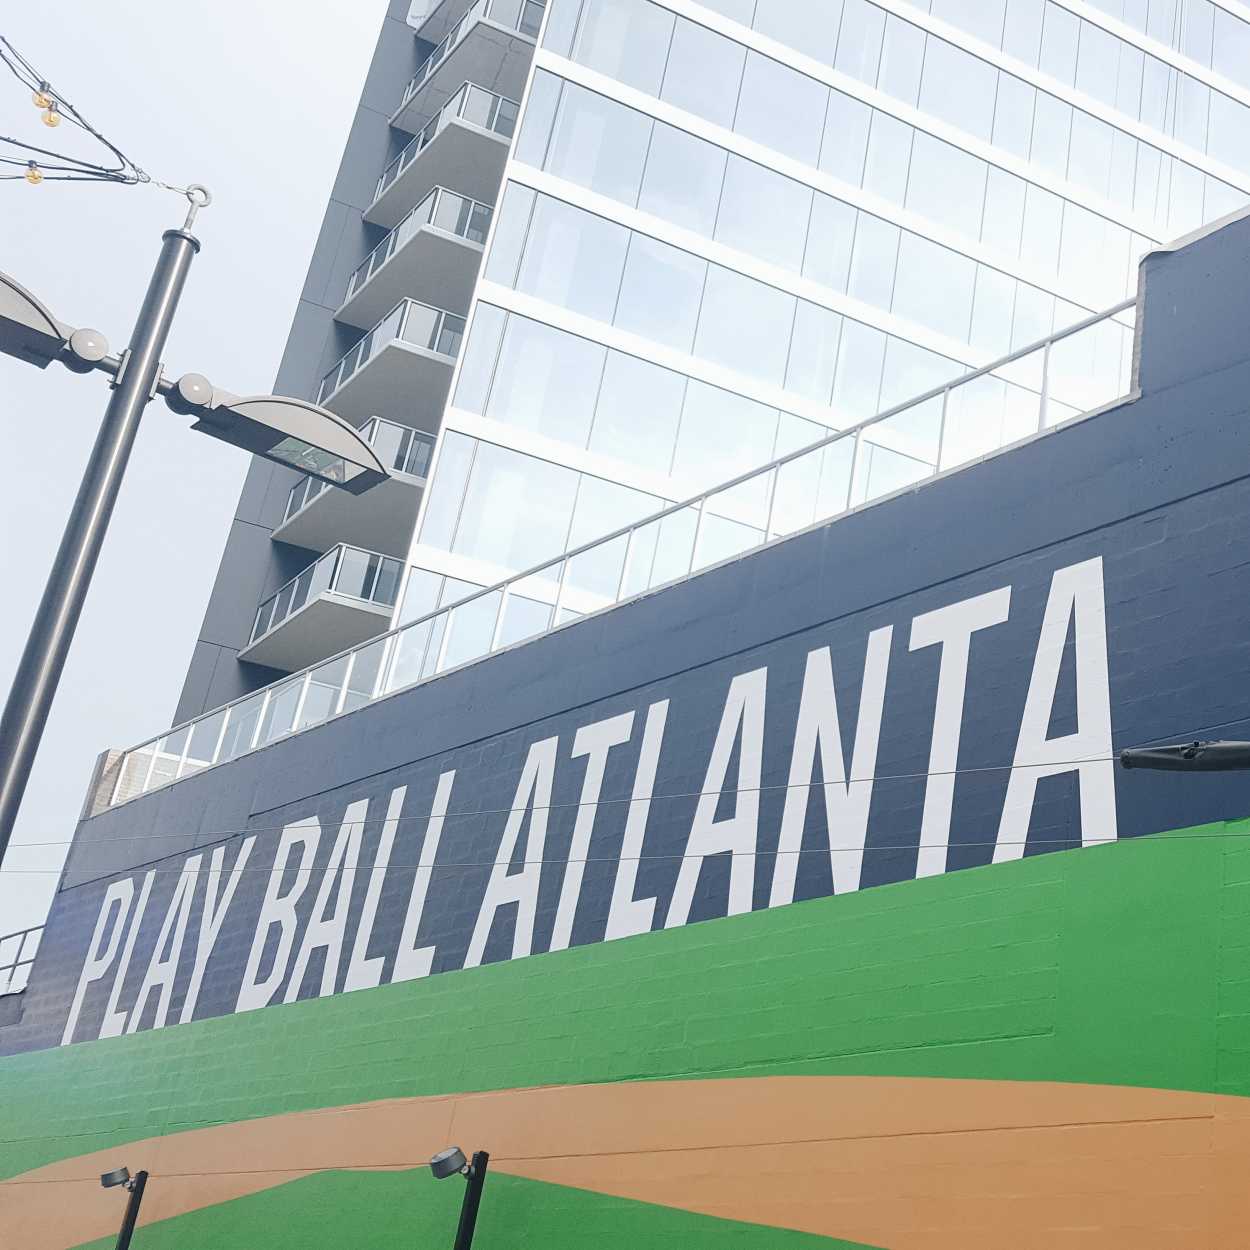 A large banner reads Play Ball Atlanta